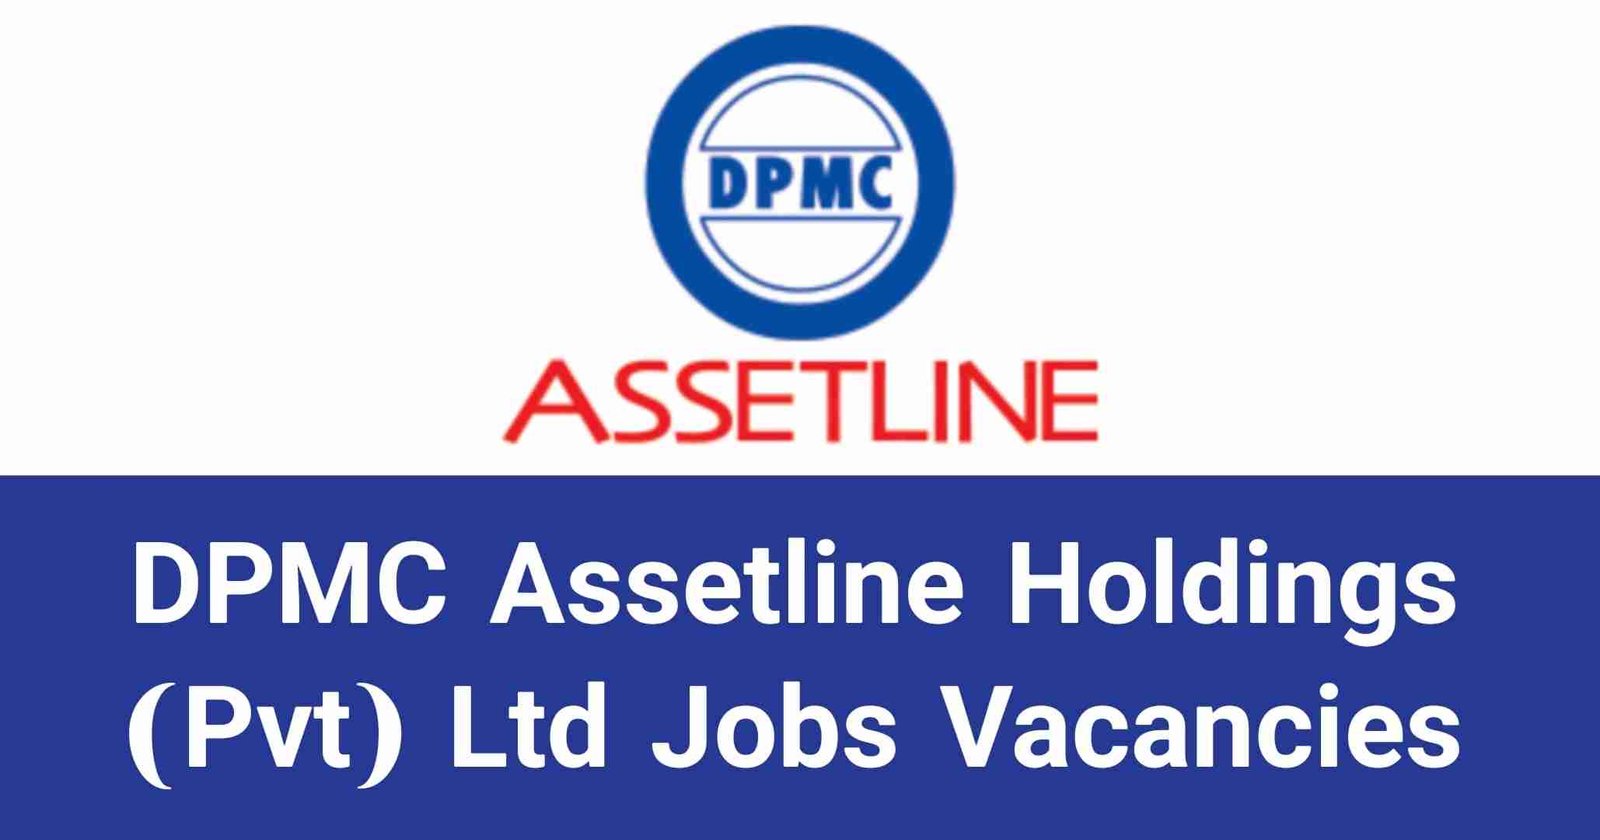 DPMC Assetline Holdings (Pvt) Ltd Jobs Vacancies